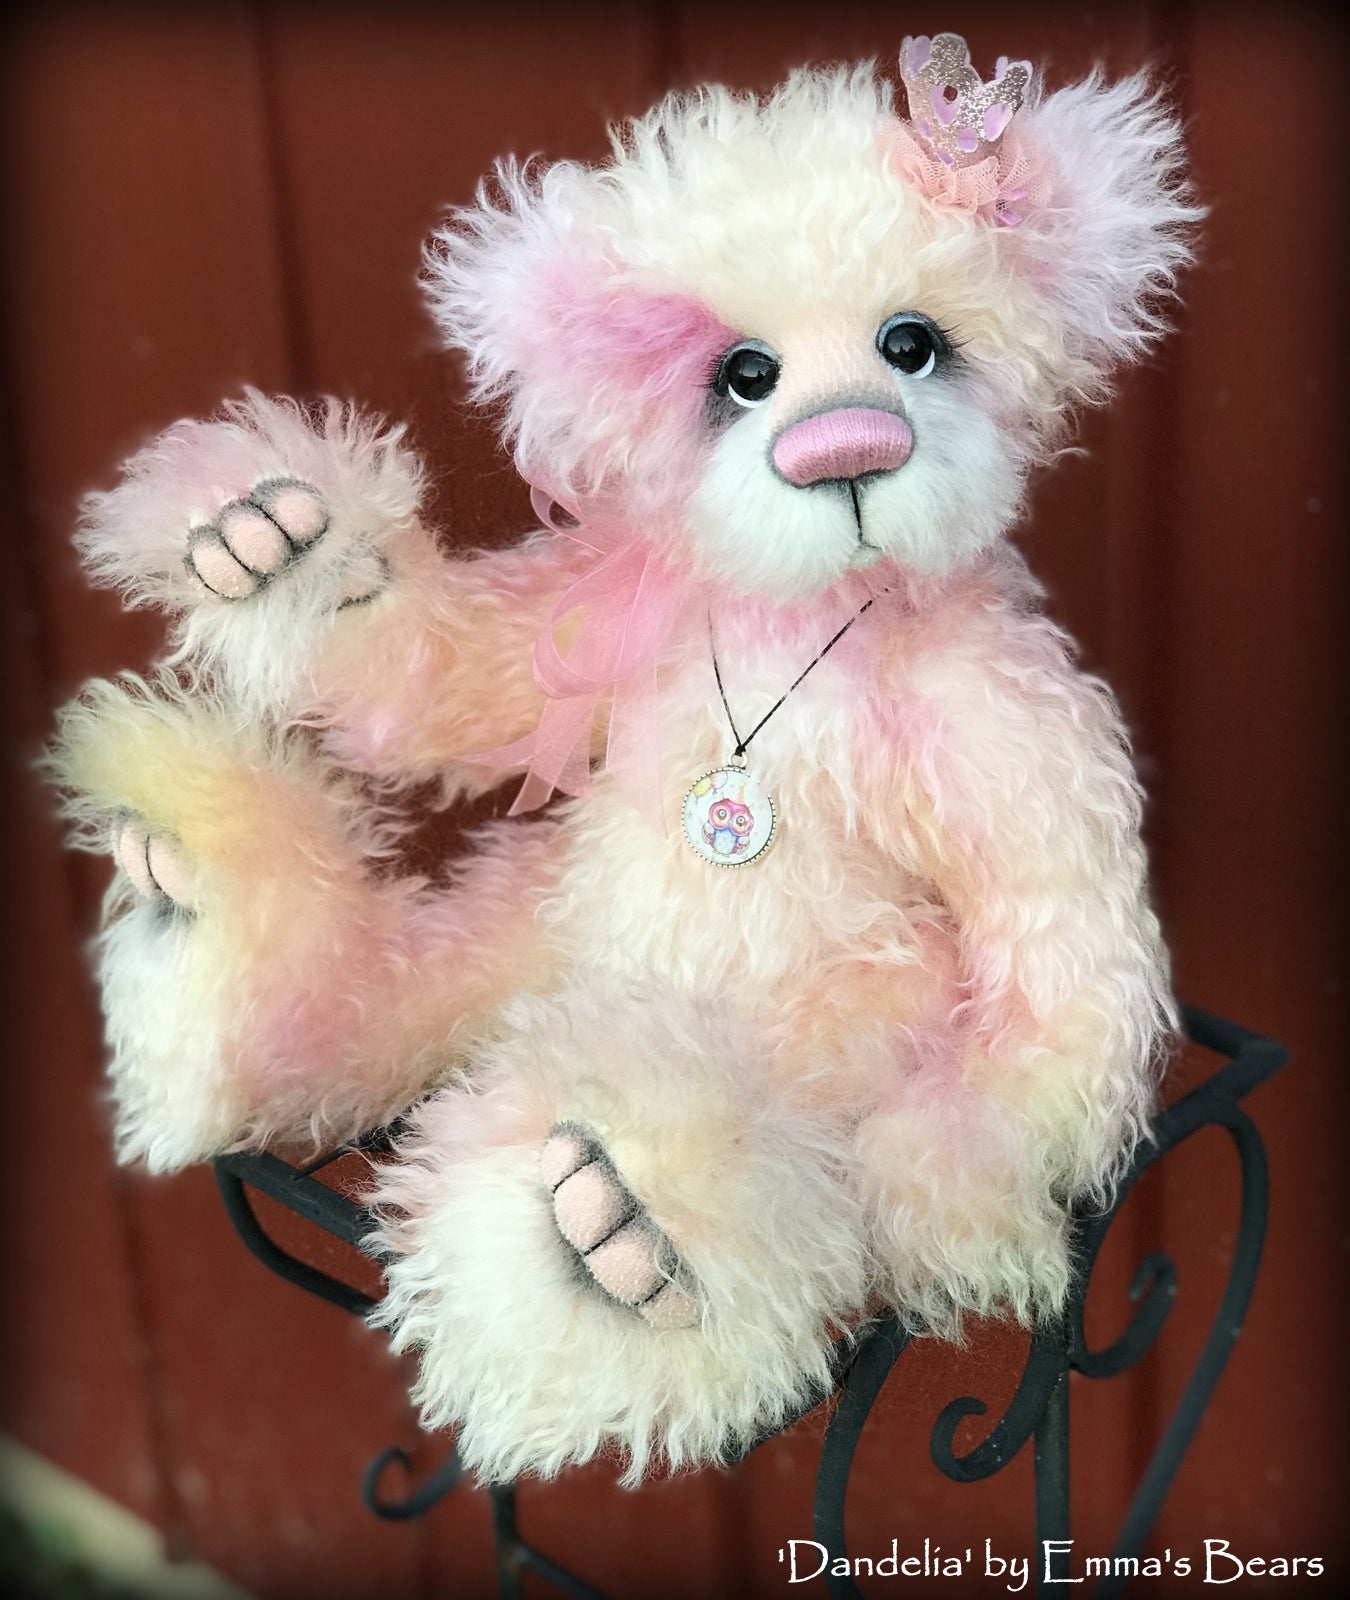 Dandelia - 16" hand-dyed mohair Artist Bear by Emma's Bears - OOAK